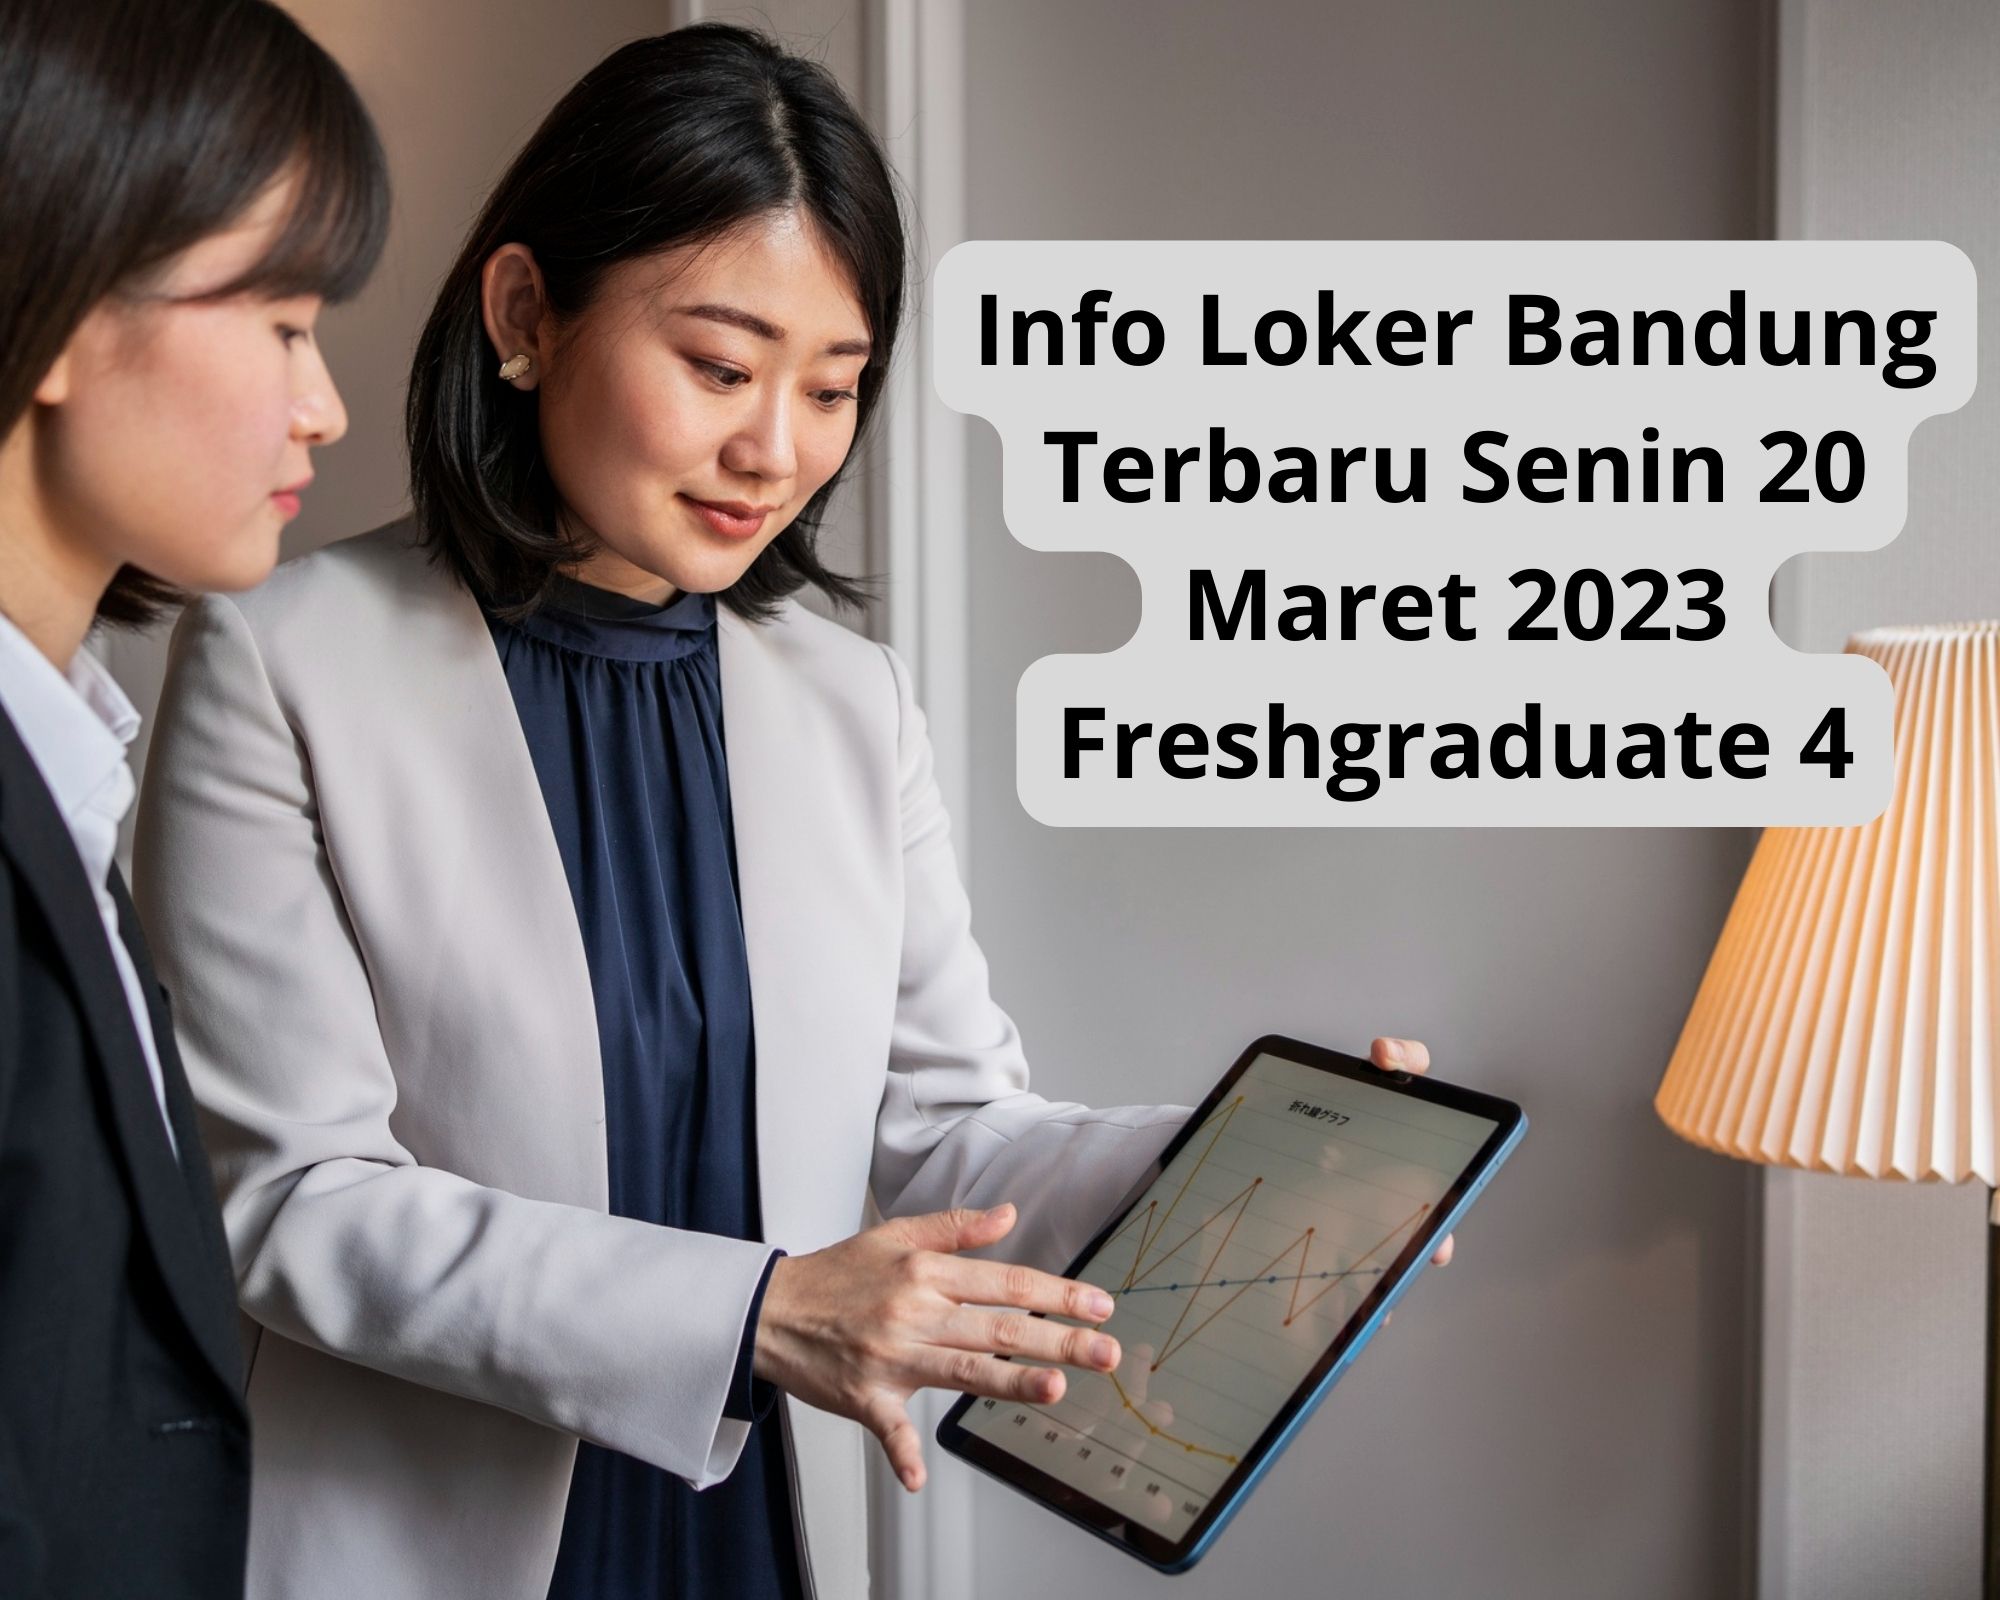 Info Loker Bandung Terbaru Senin 20 Maret 2023 Freshgraduate 4